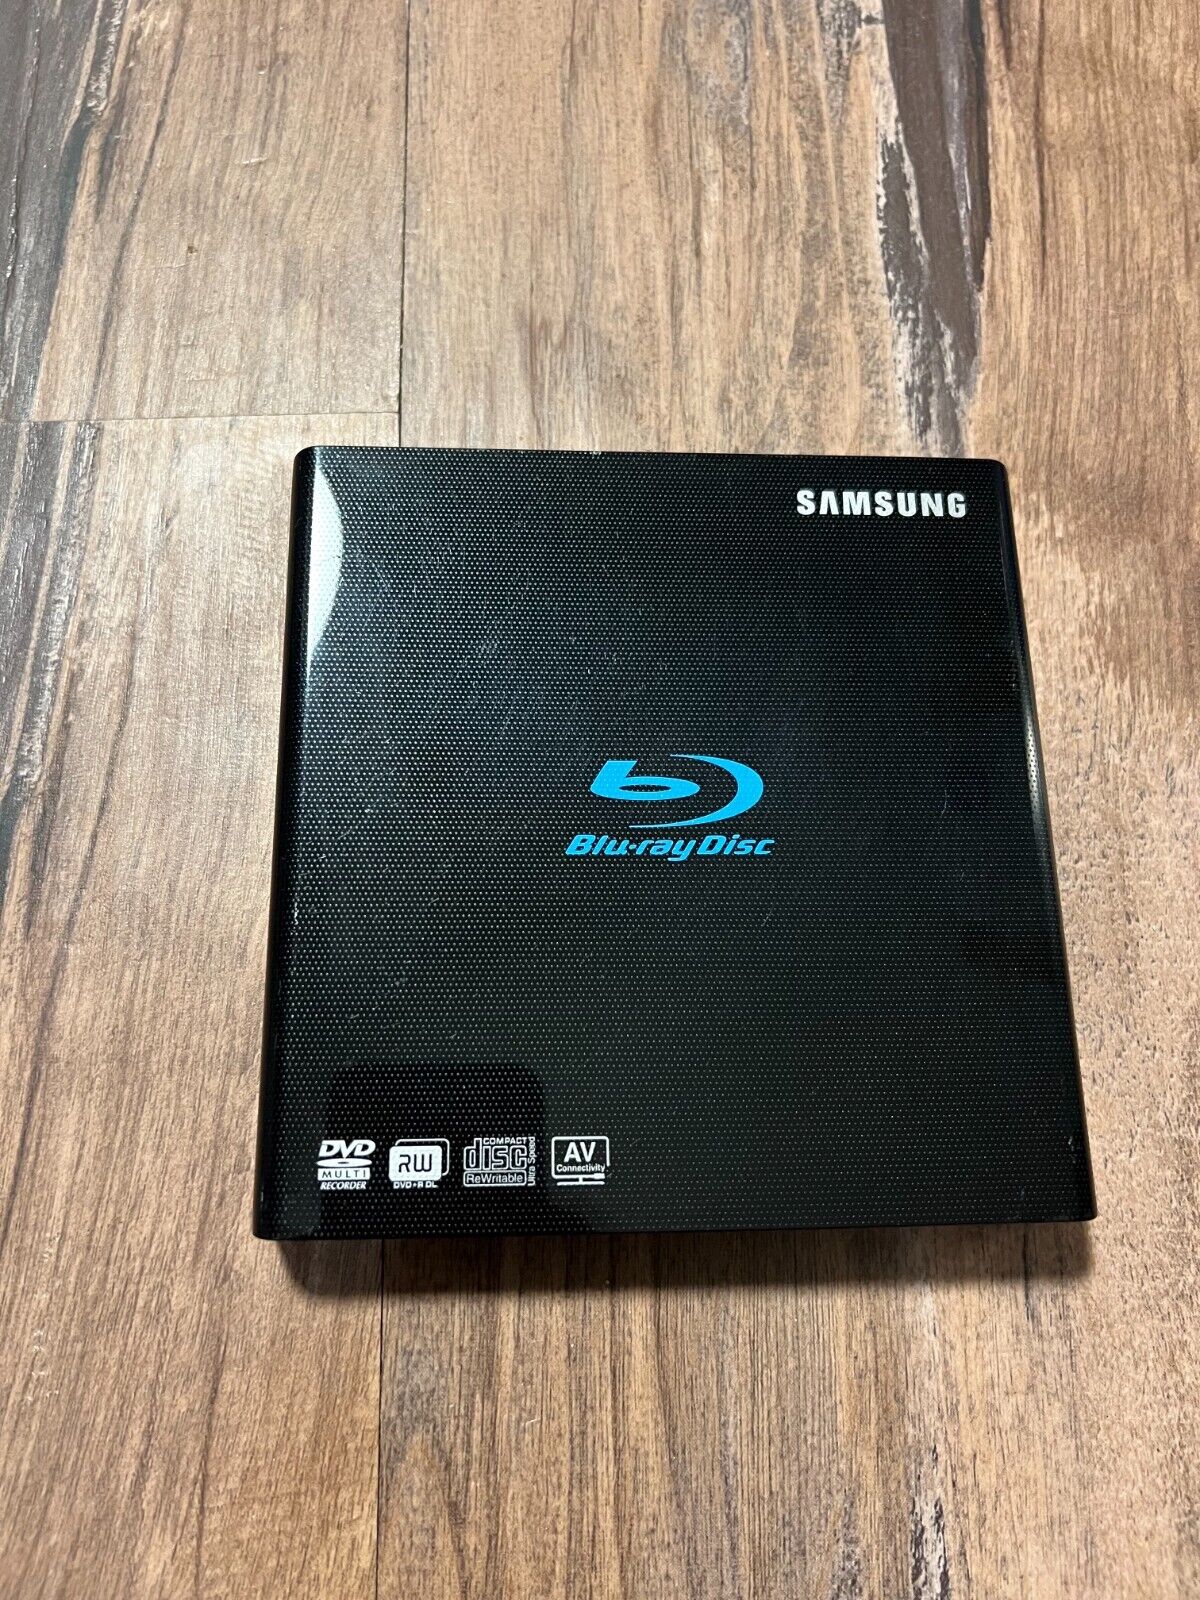 Samsung SE-506BB/TSBD Slim Portable USB Blu-ray Reader/Writer (Black)